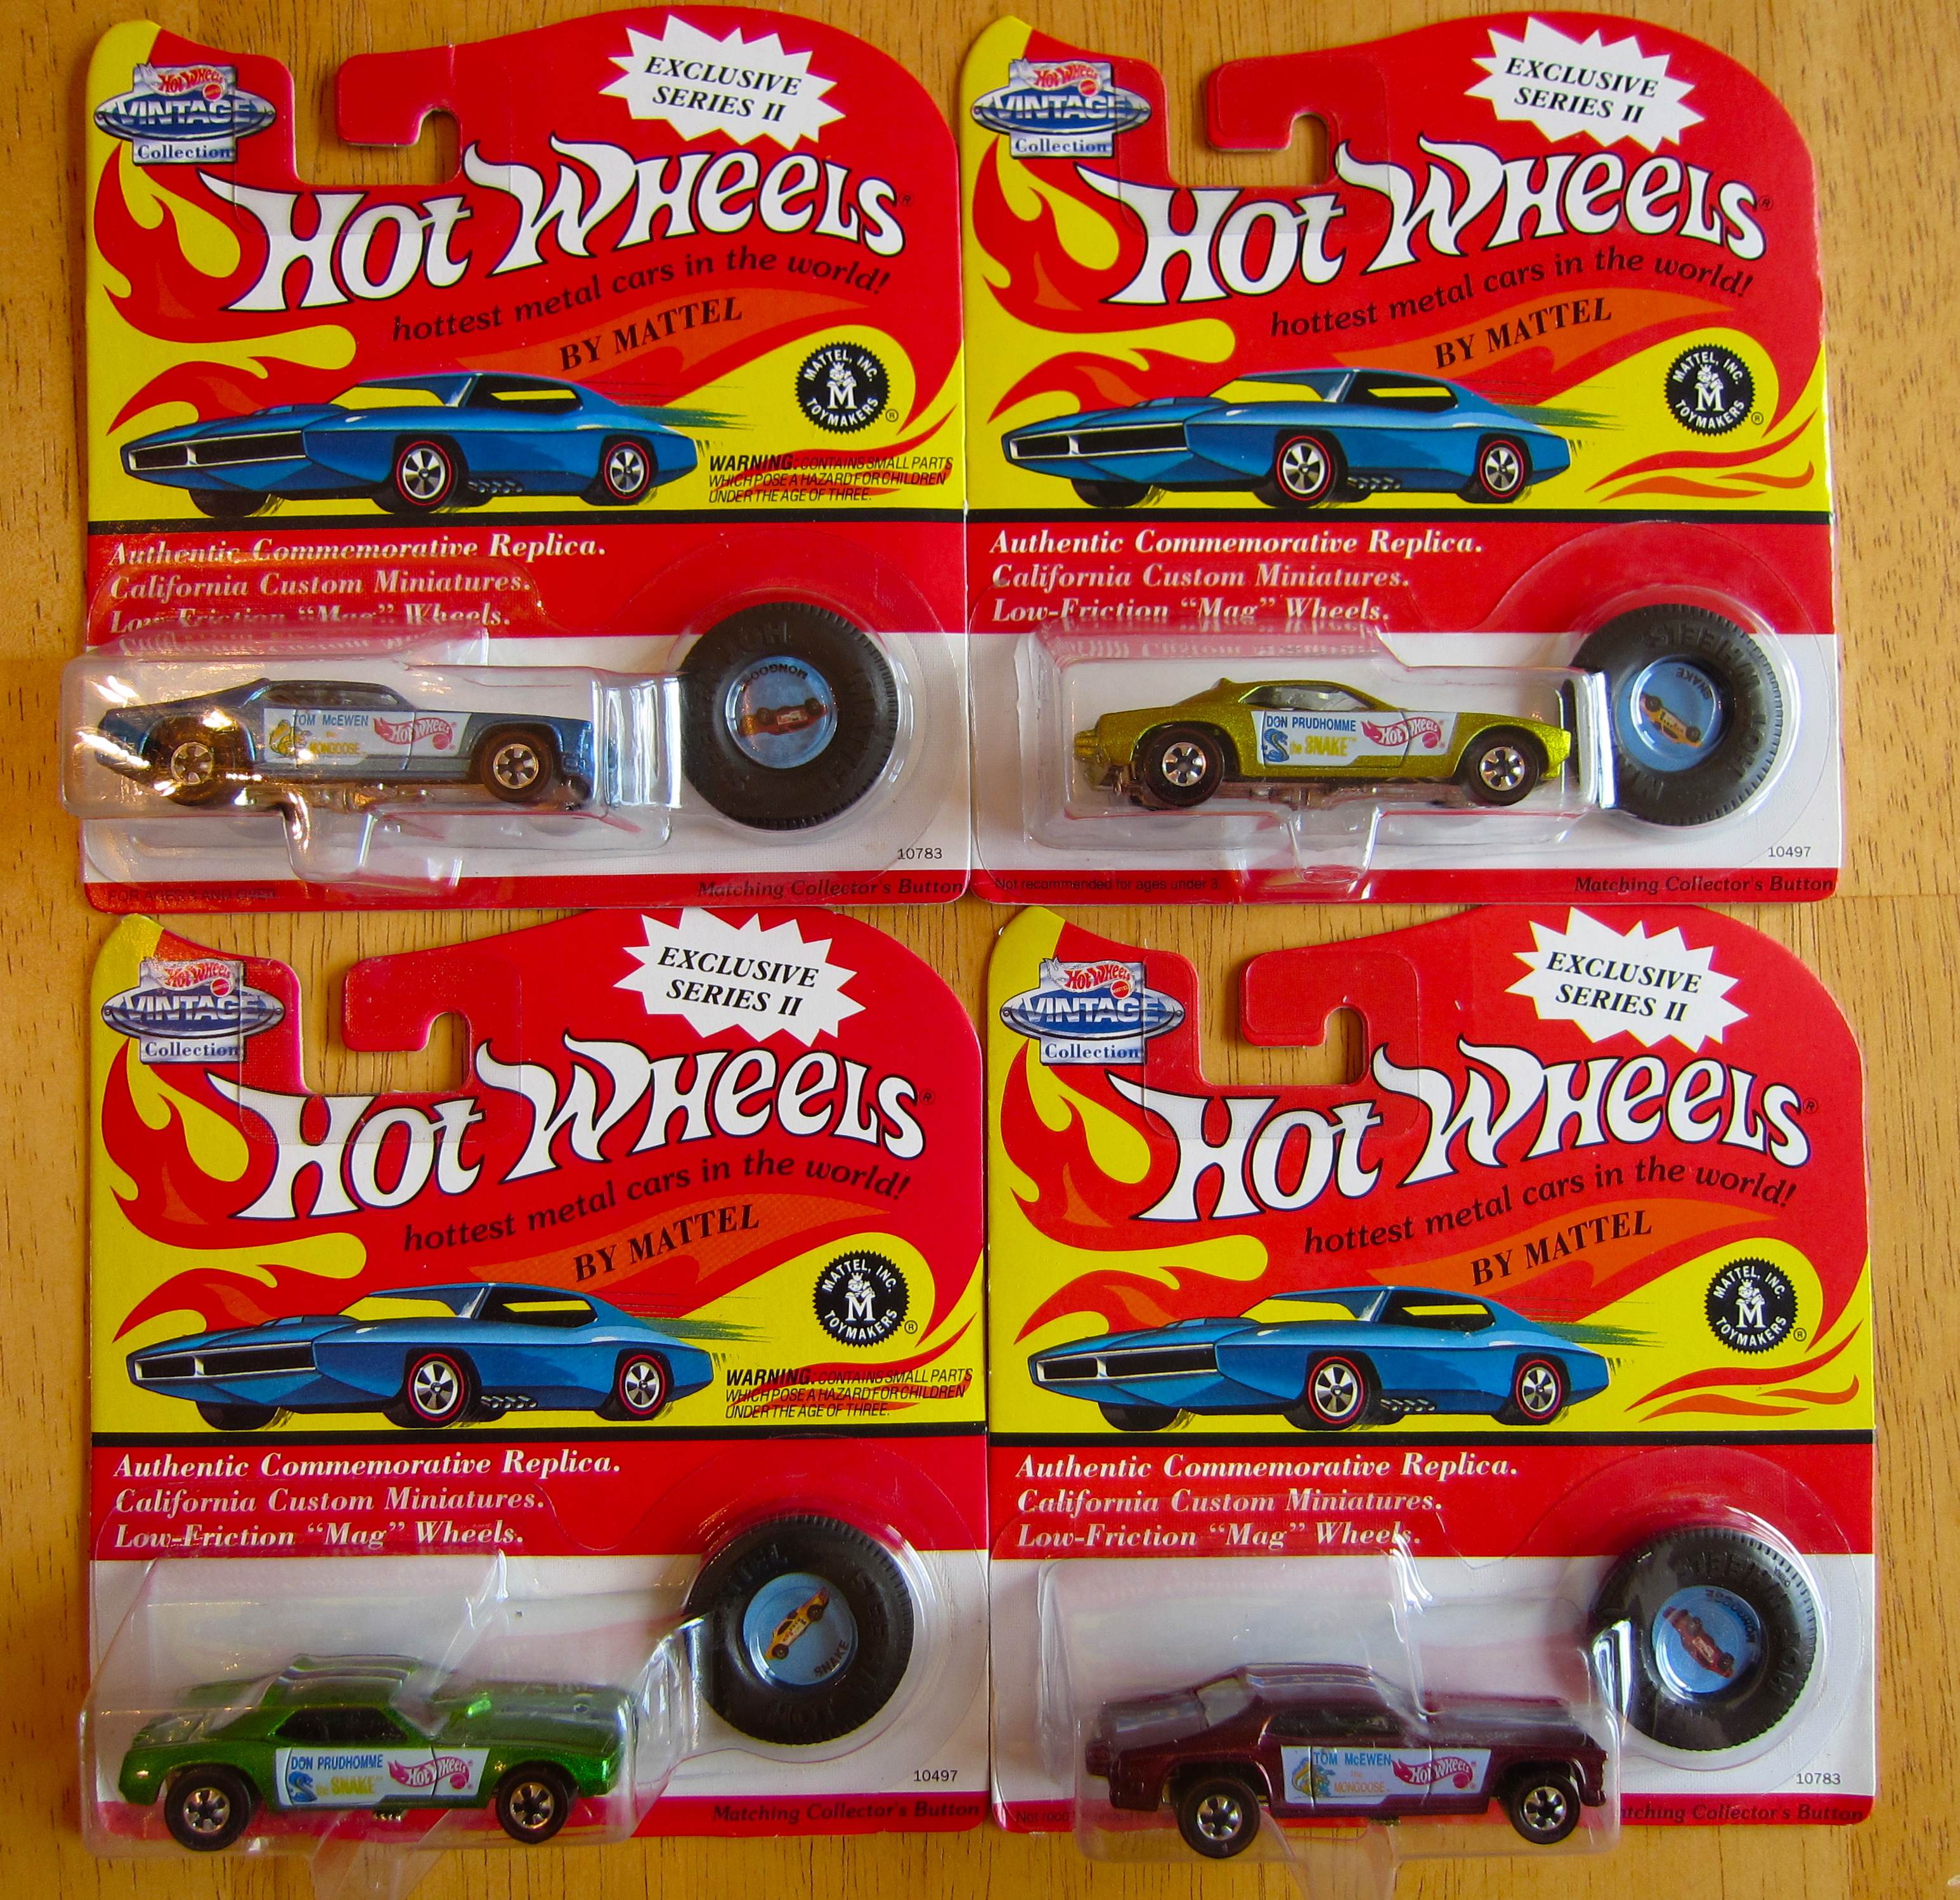 original hot wheels mongoose and snake drag race set